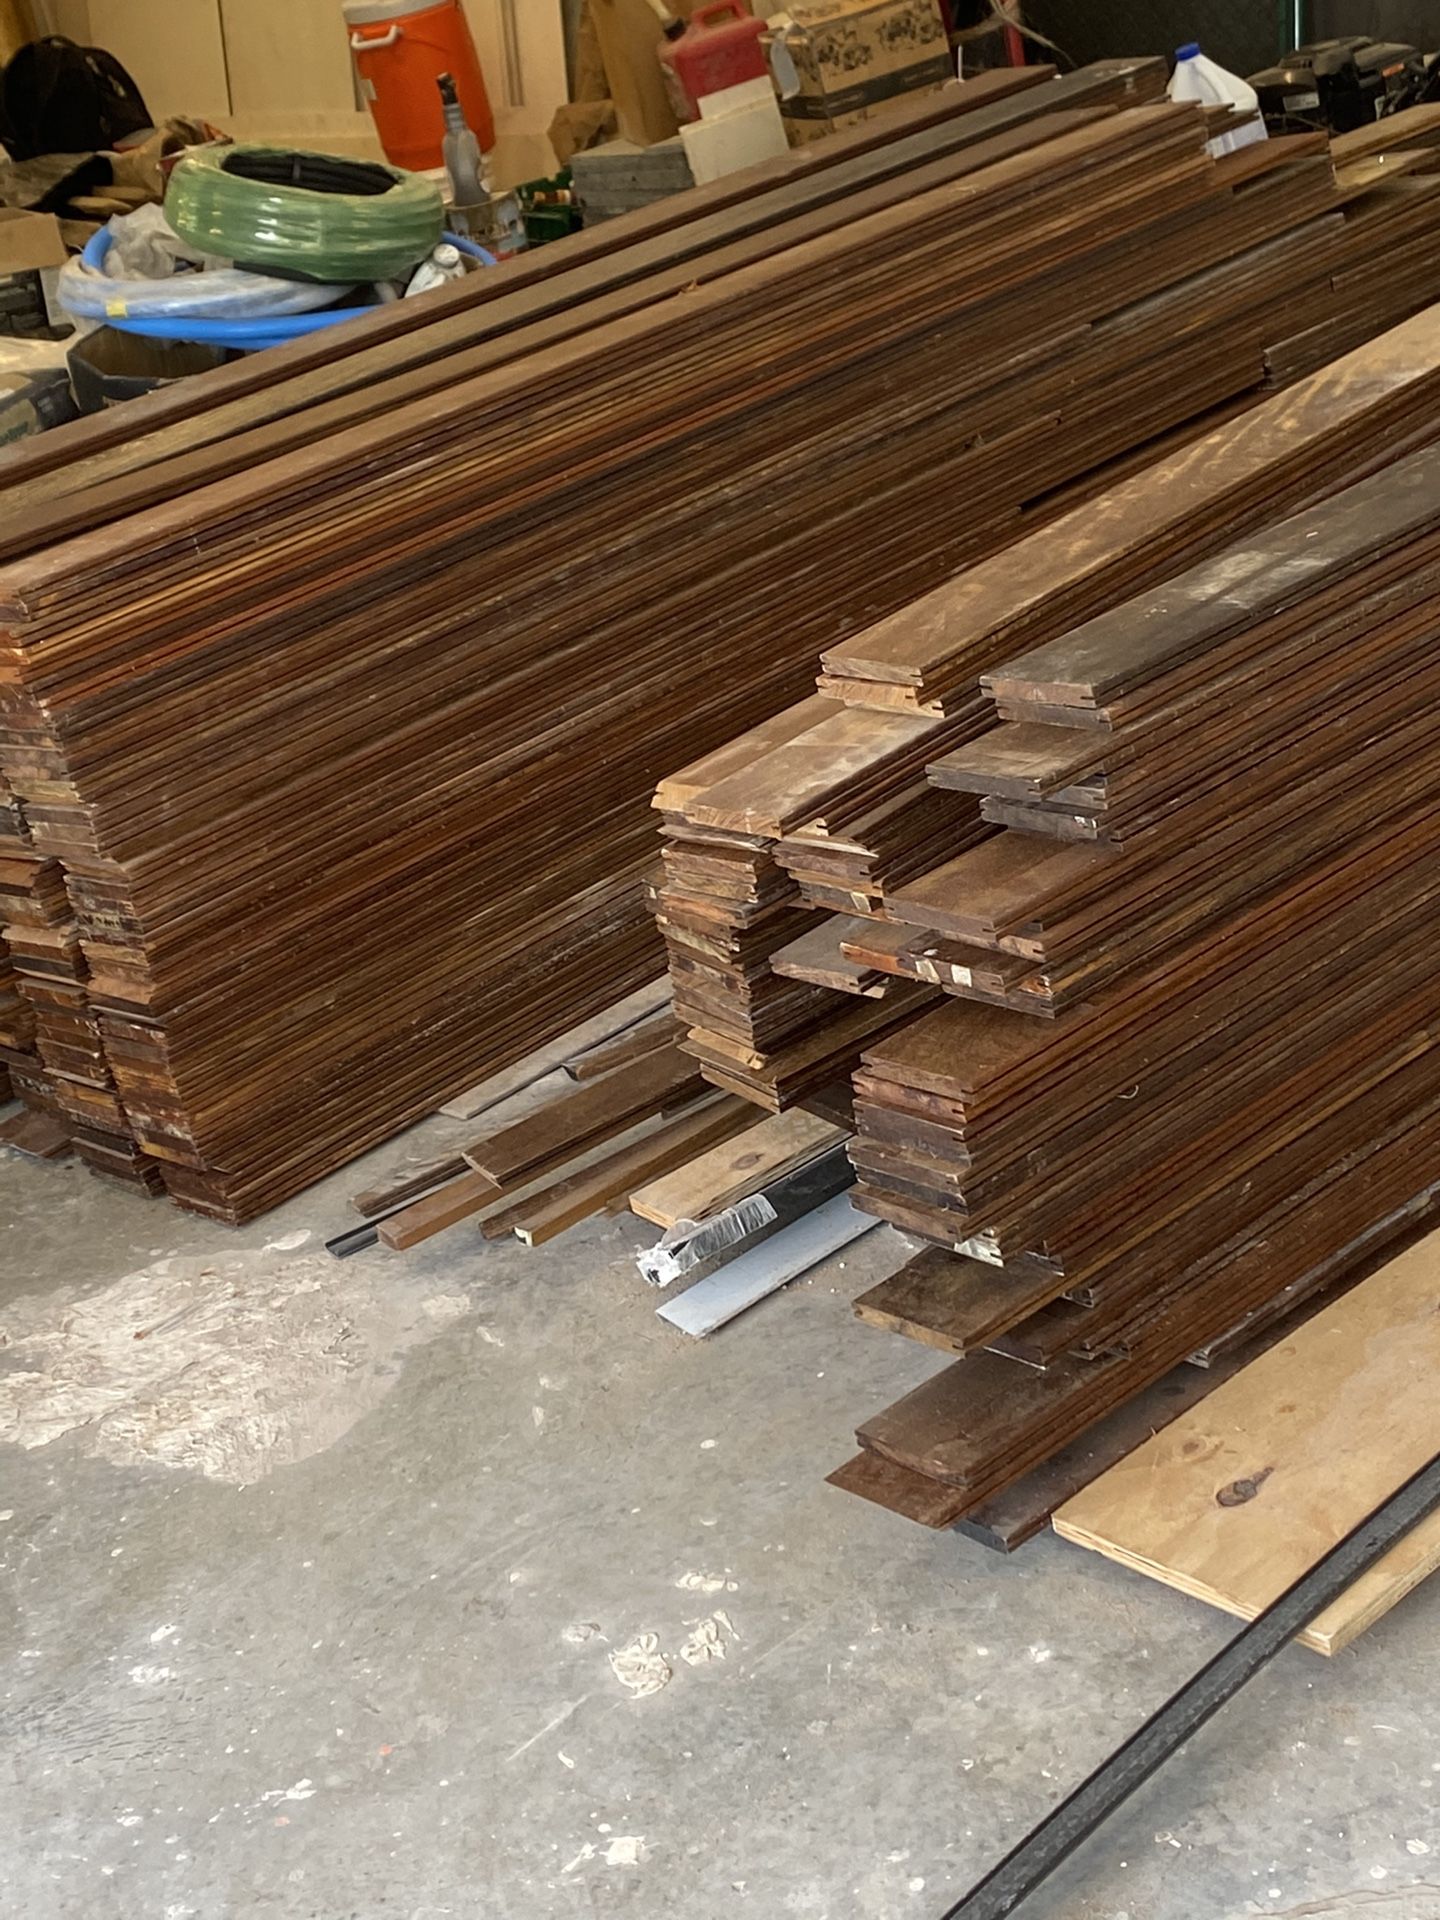 Wood refinishing and maintenance